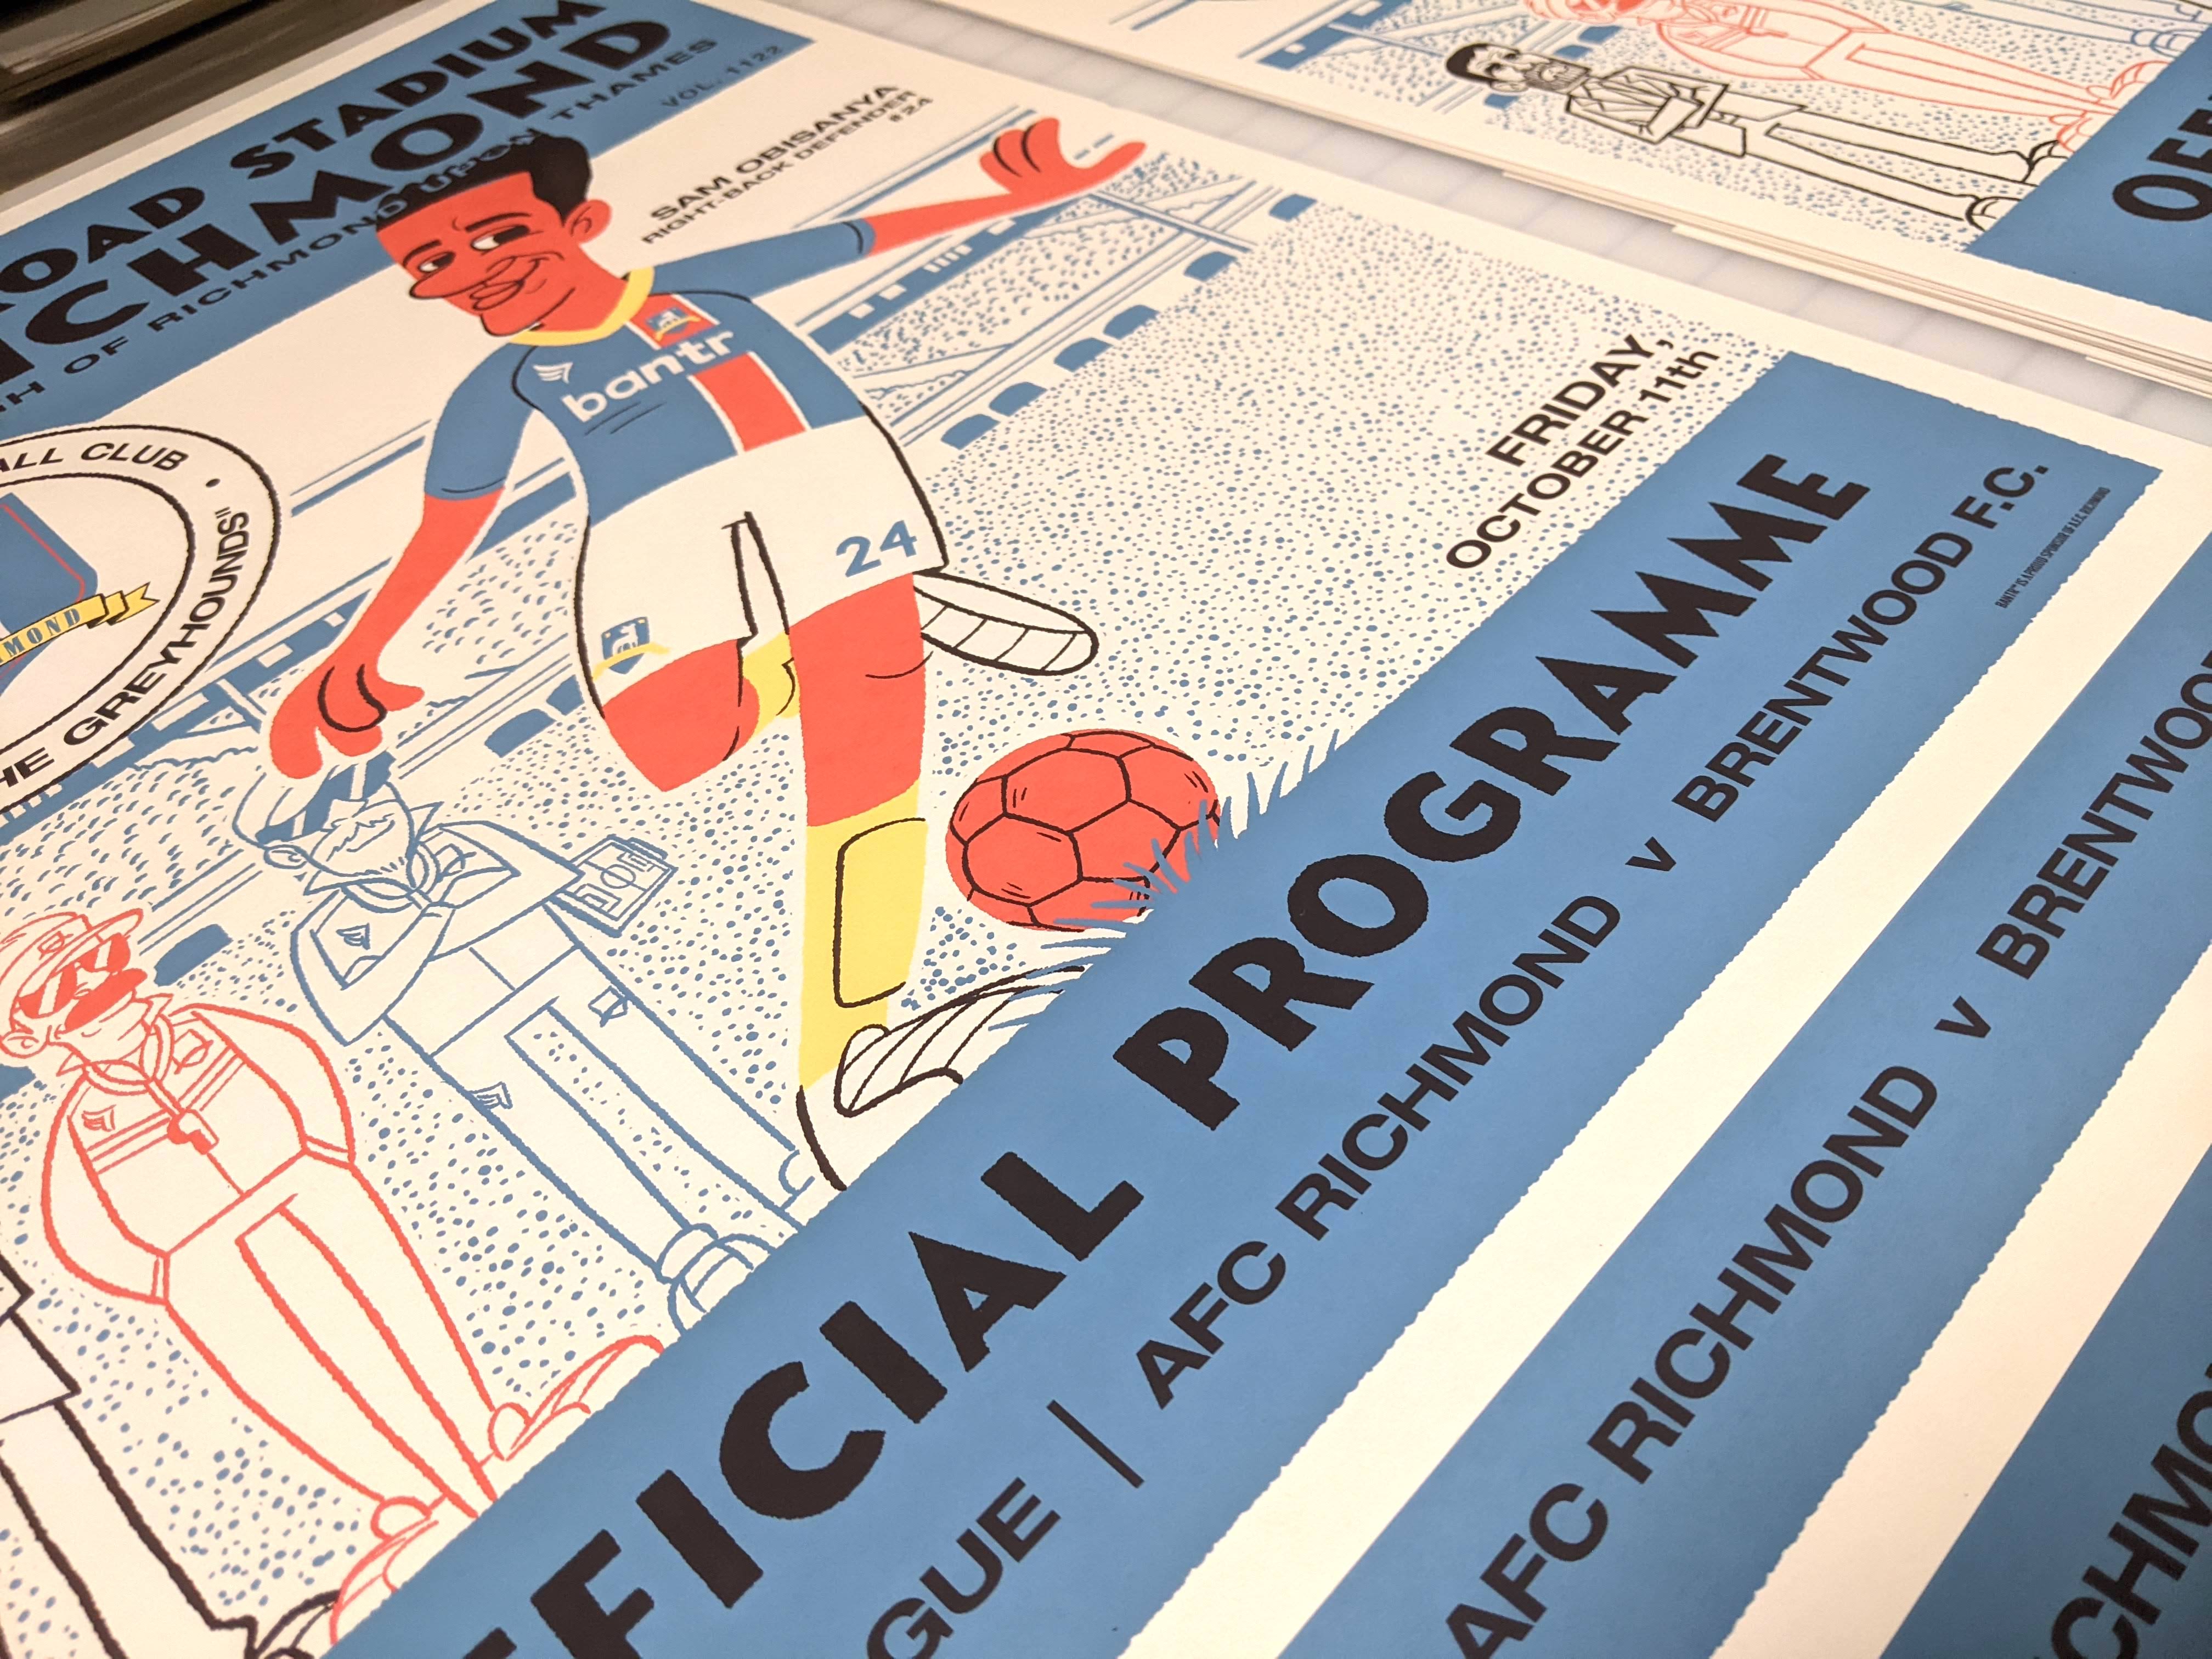 "AFC Richmond Official Programme" by Ian Glaubinger